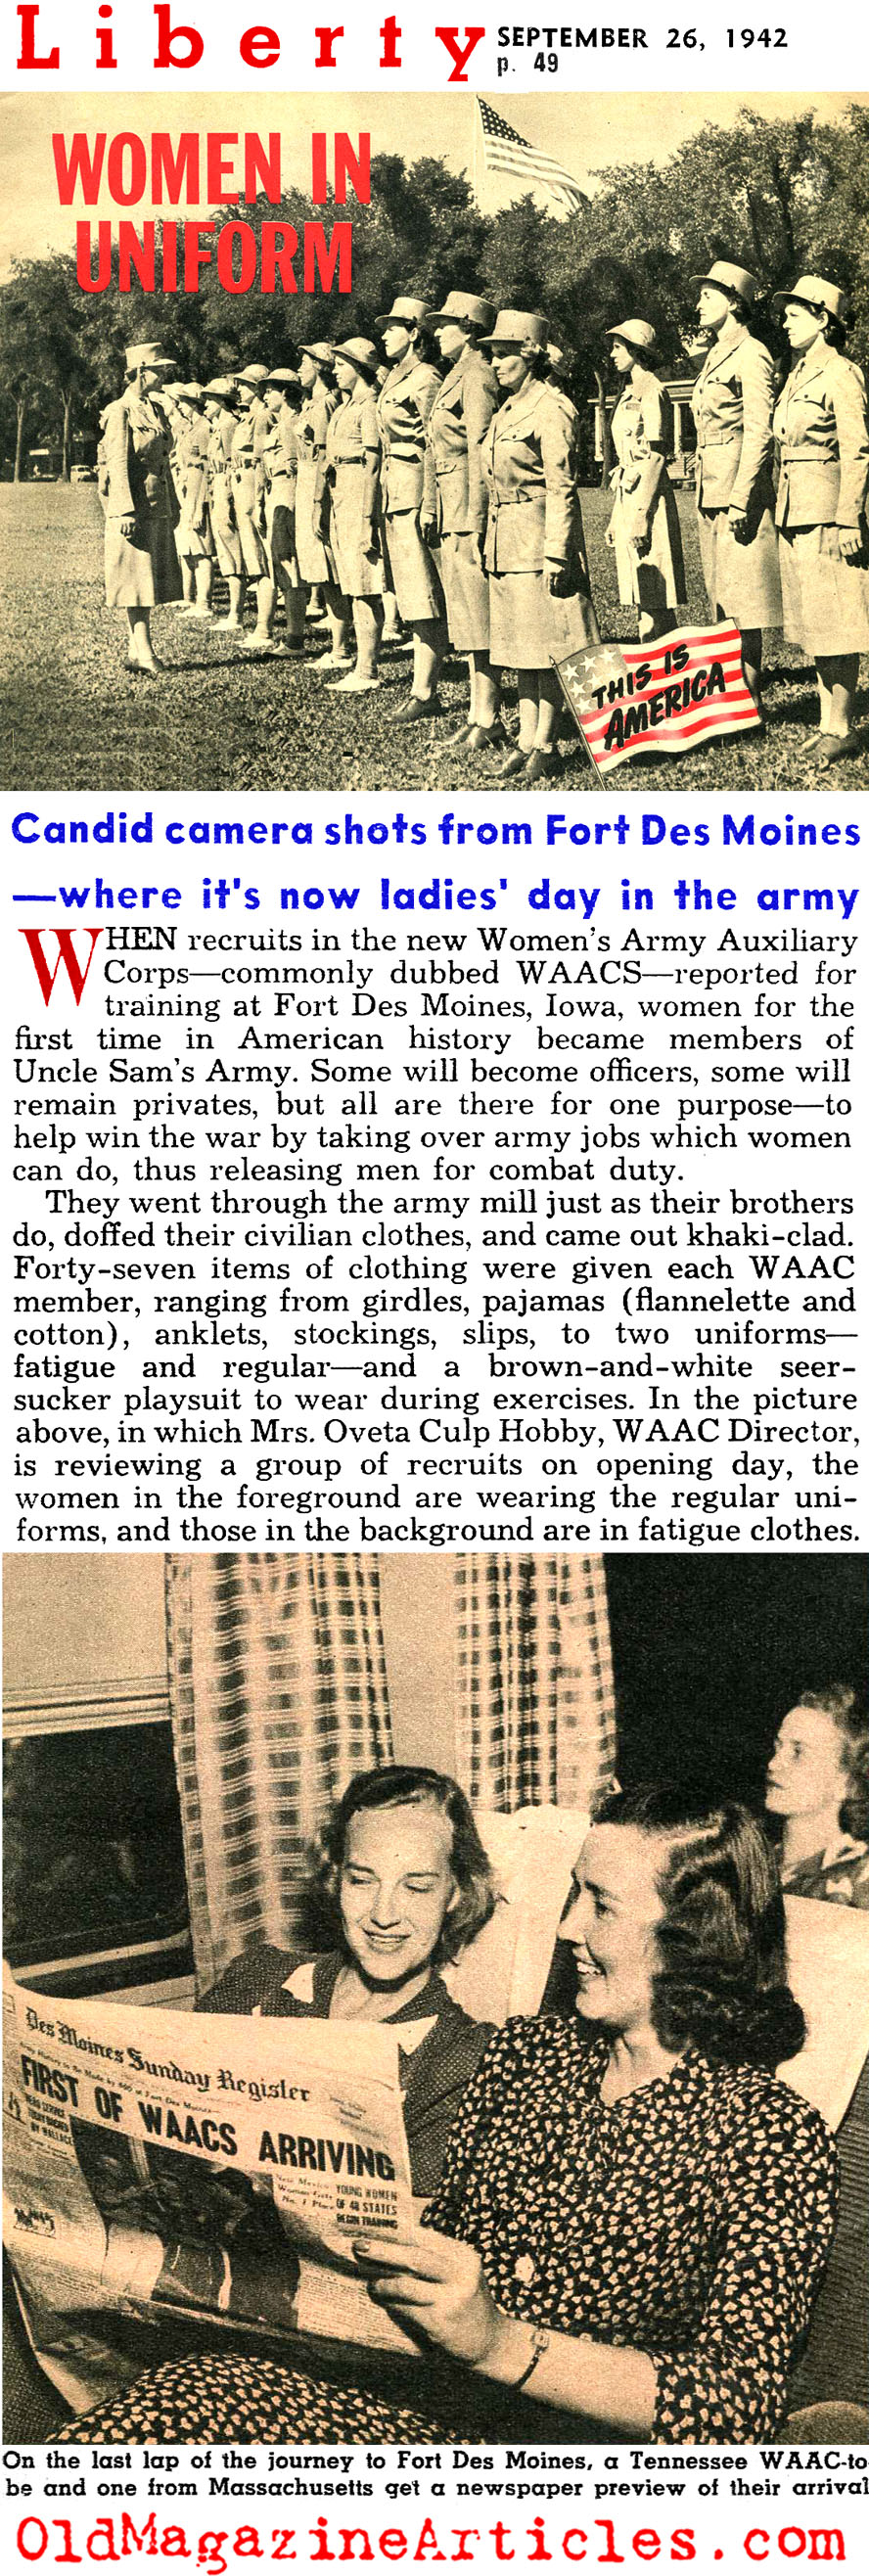 Fort Des Moines (Liberty Magazine, 1942)